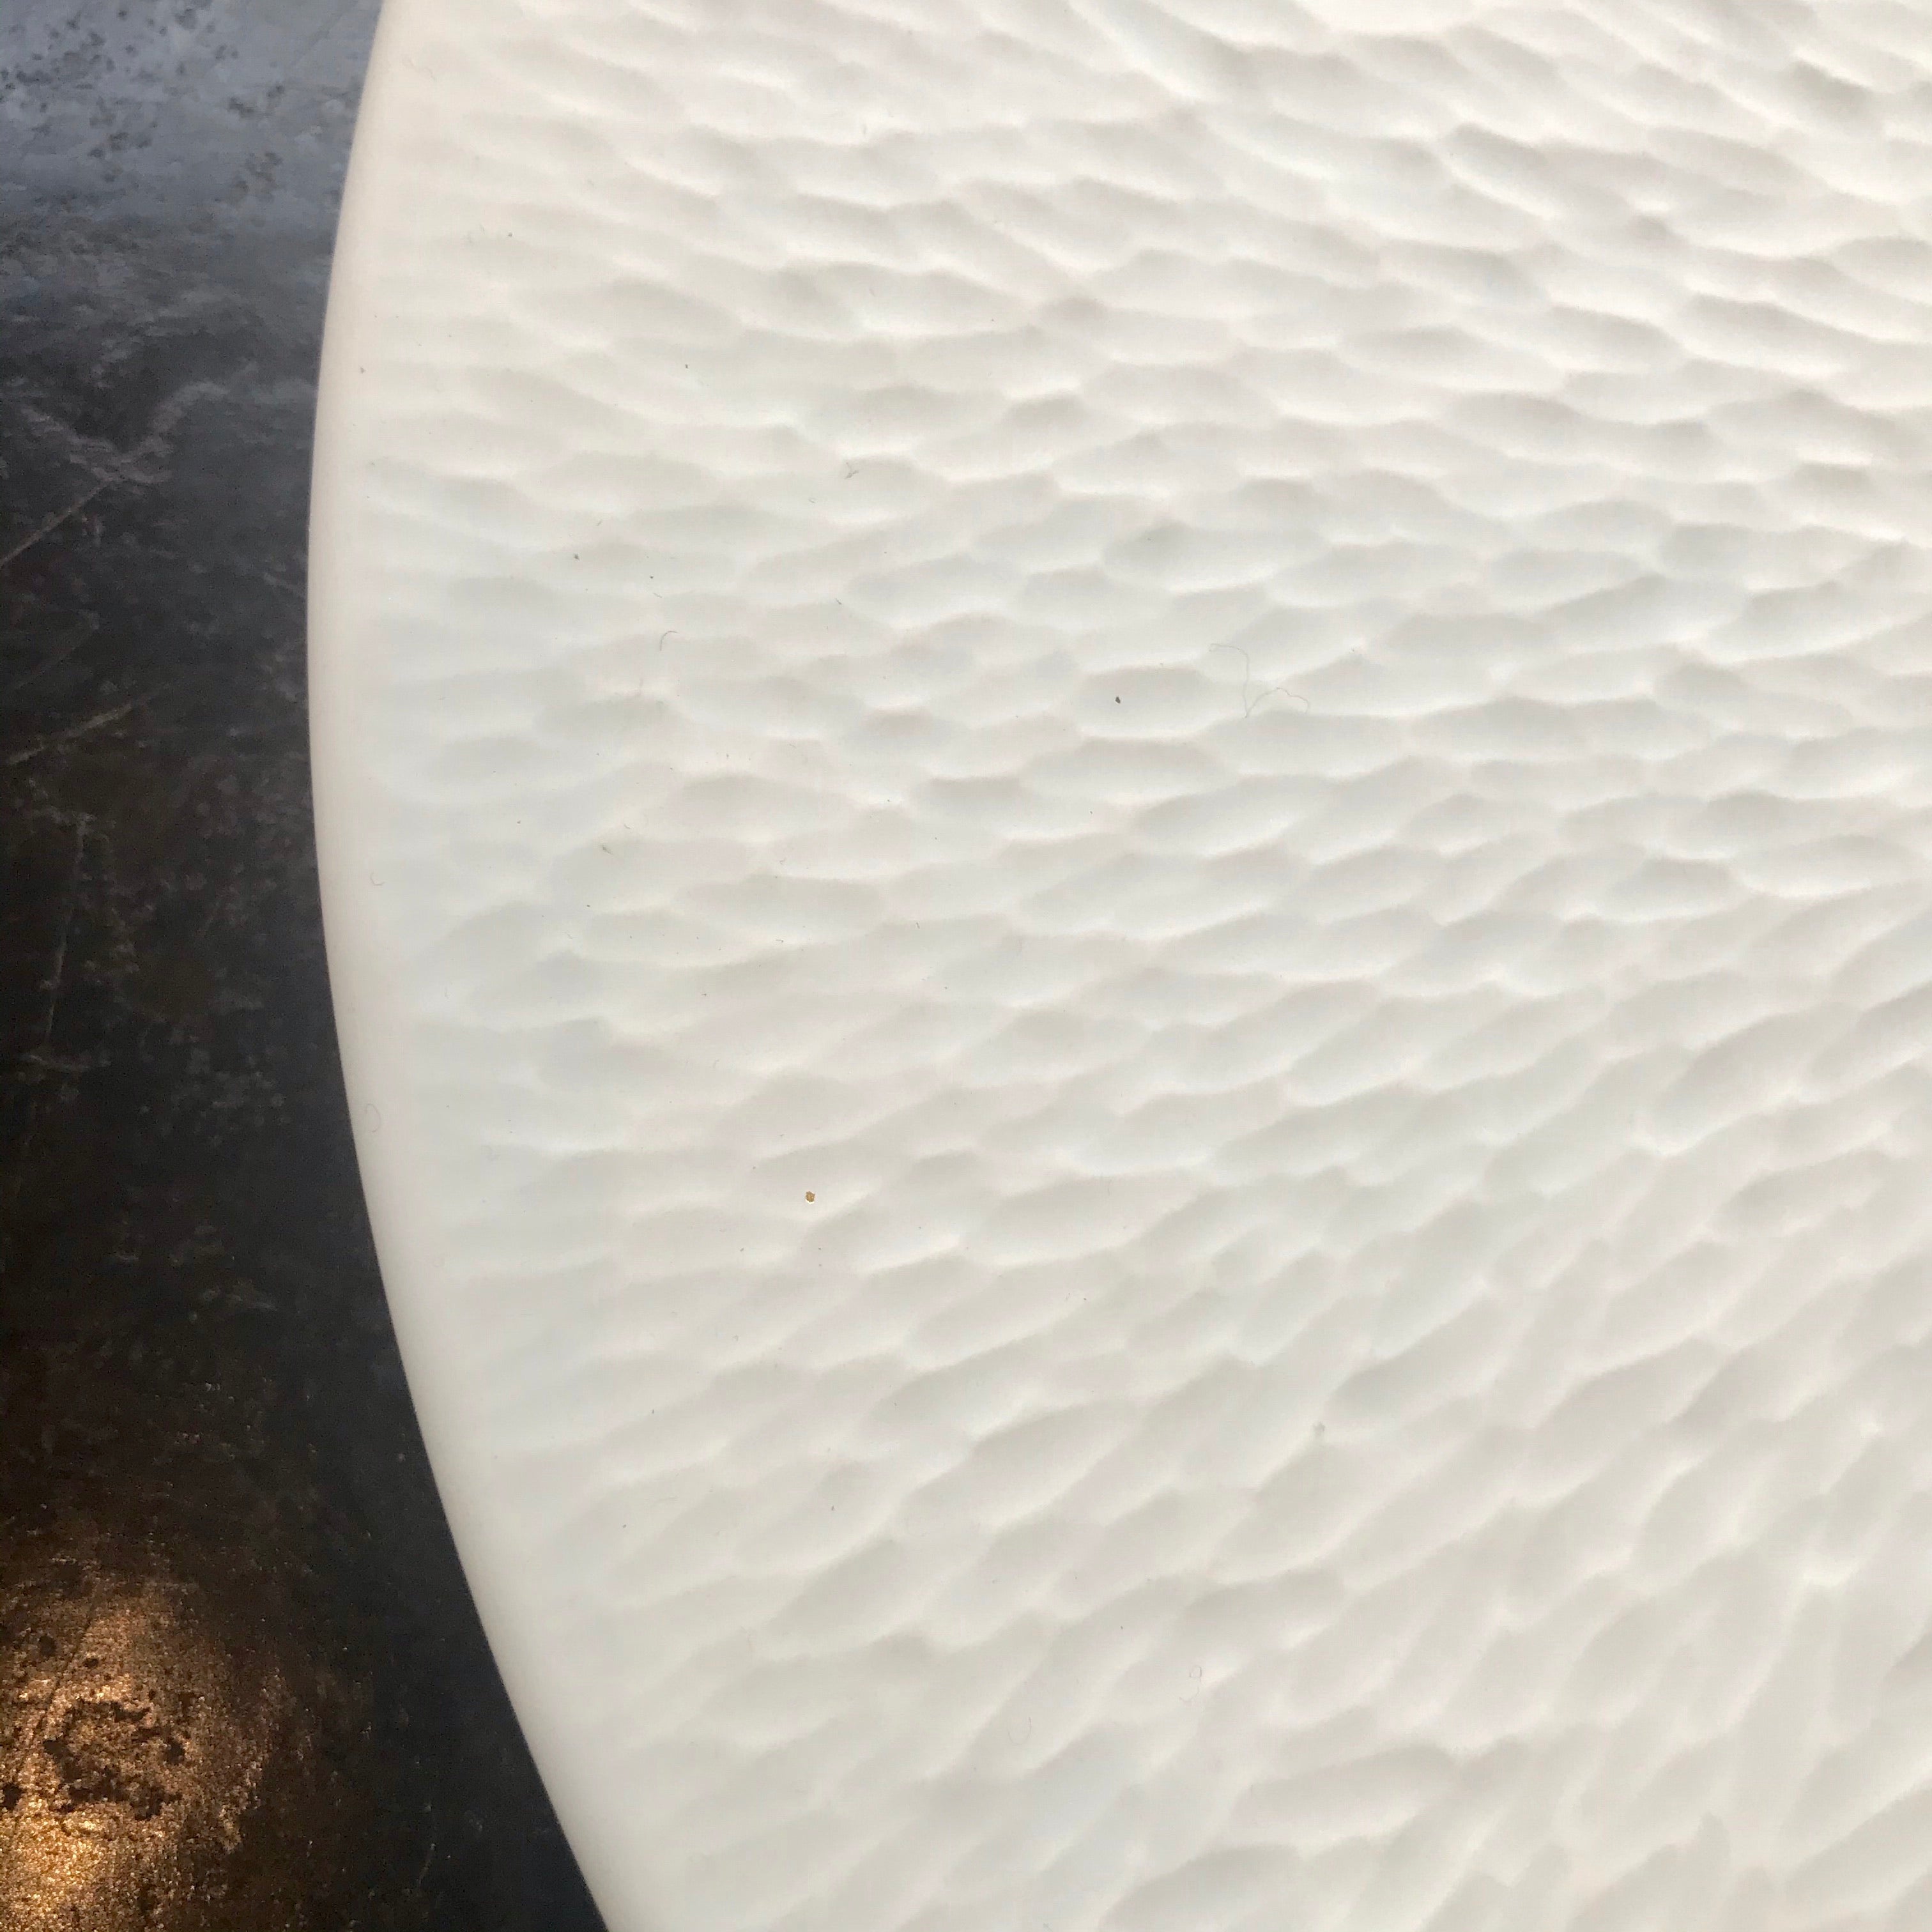 Raynaud's White Sablé Mineral Presentation Plate